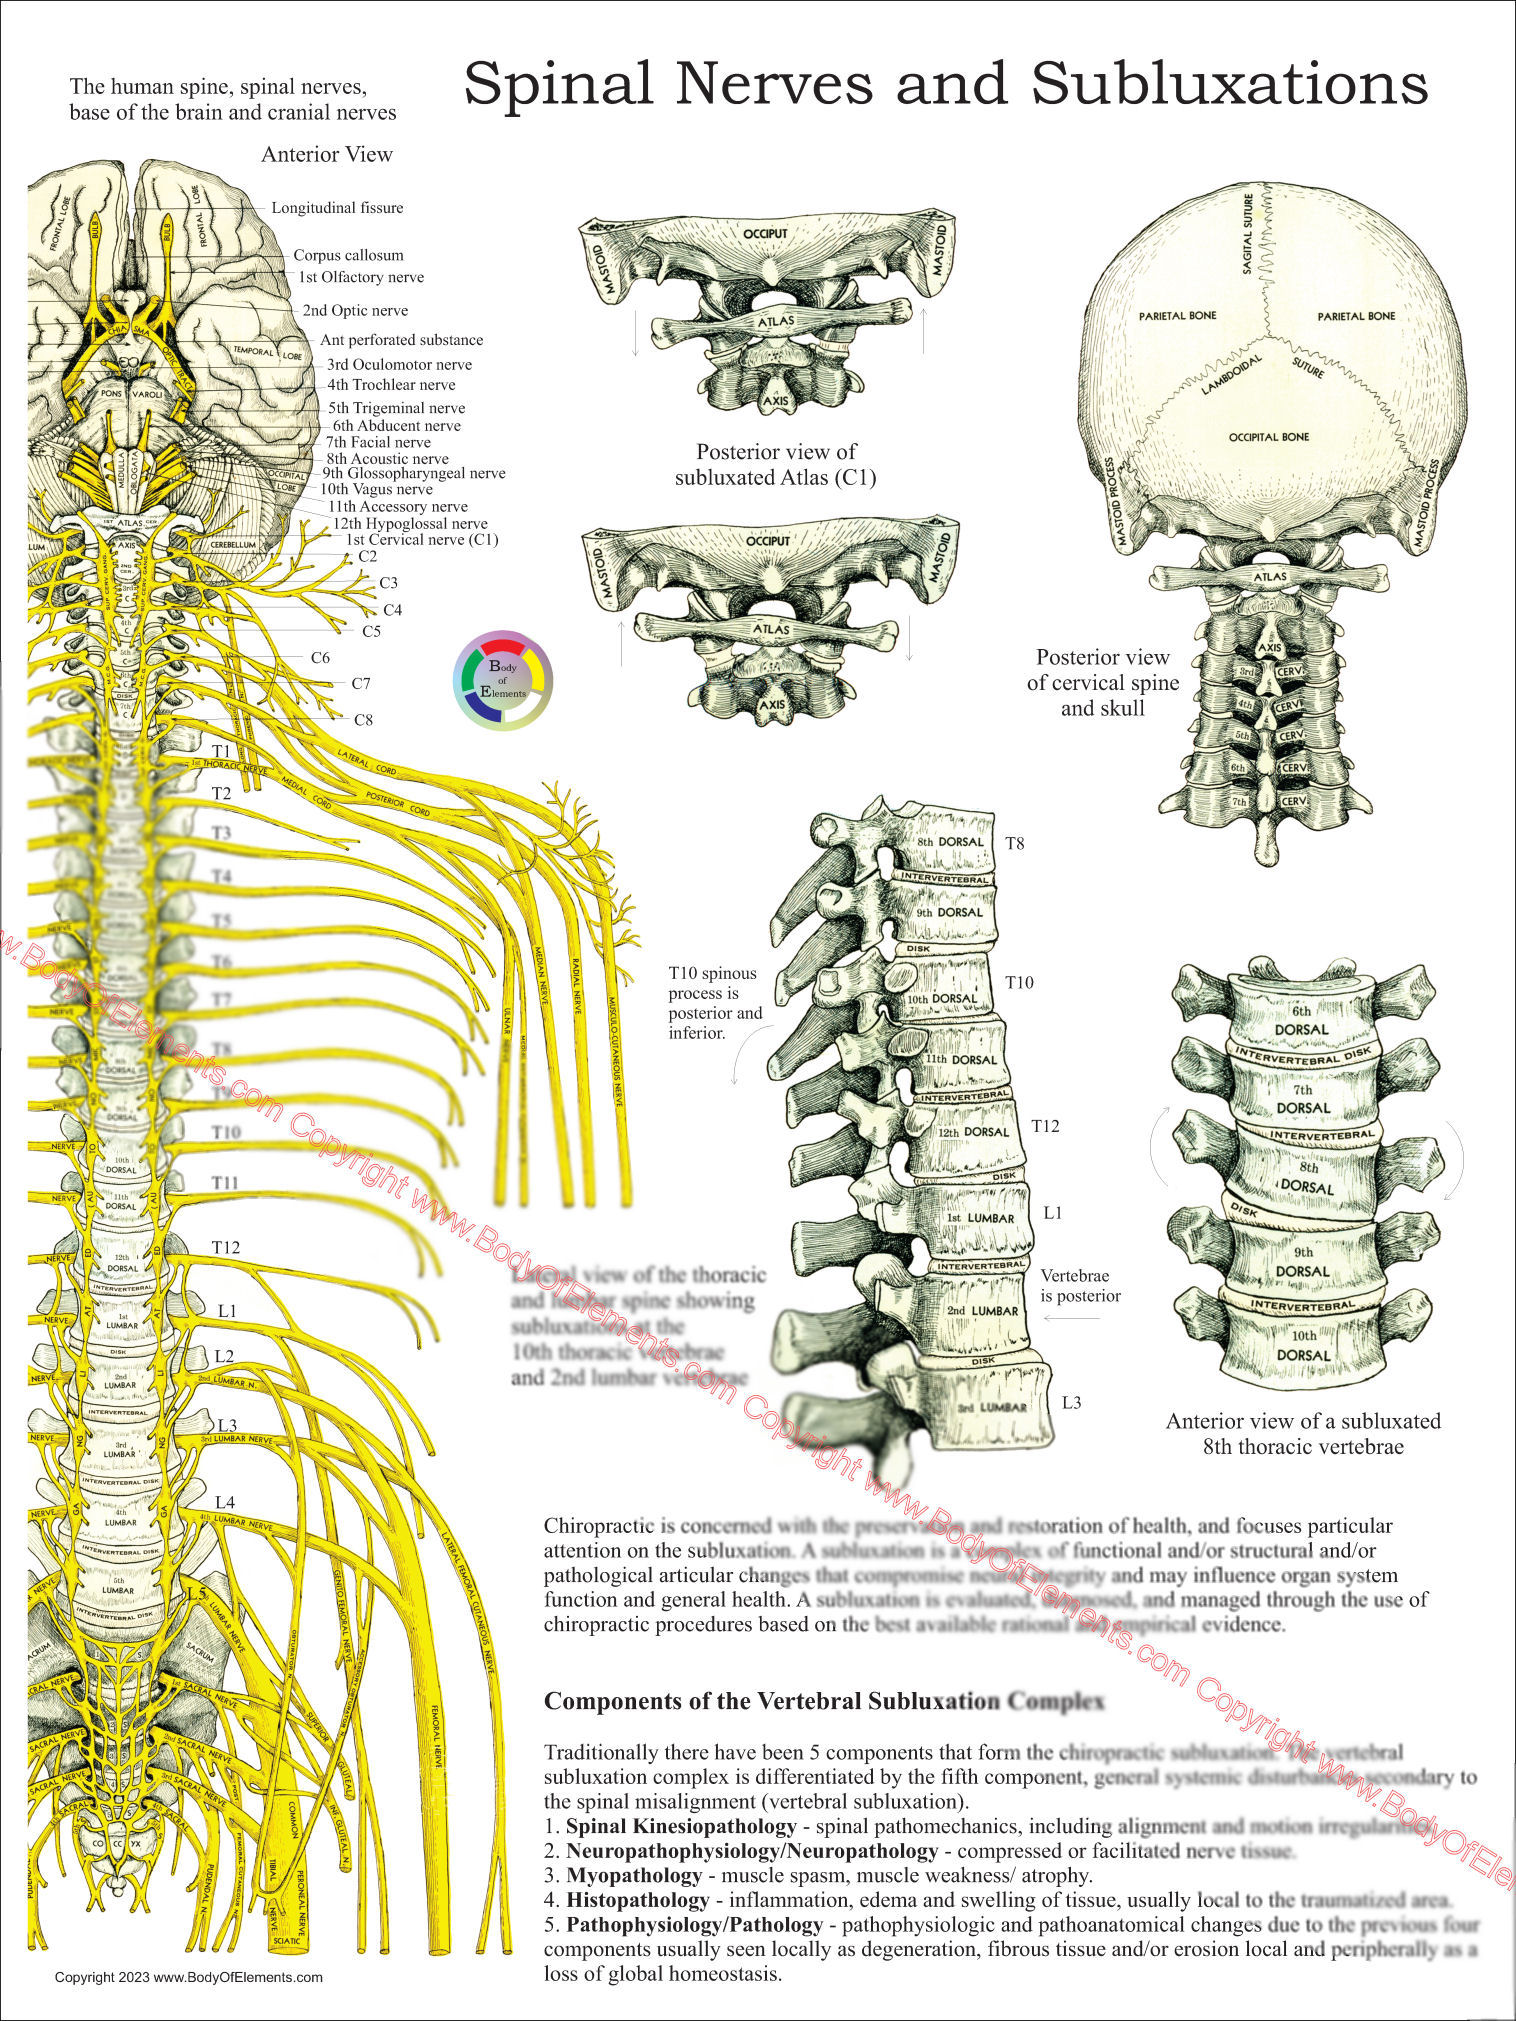 Chiropractic Subluxation Complex Poster